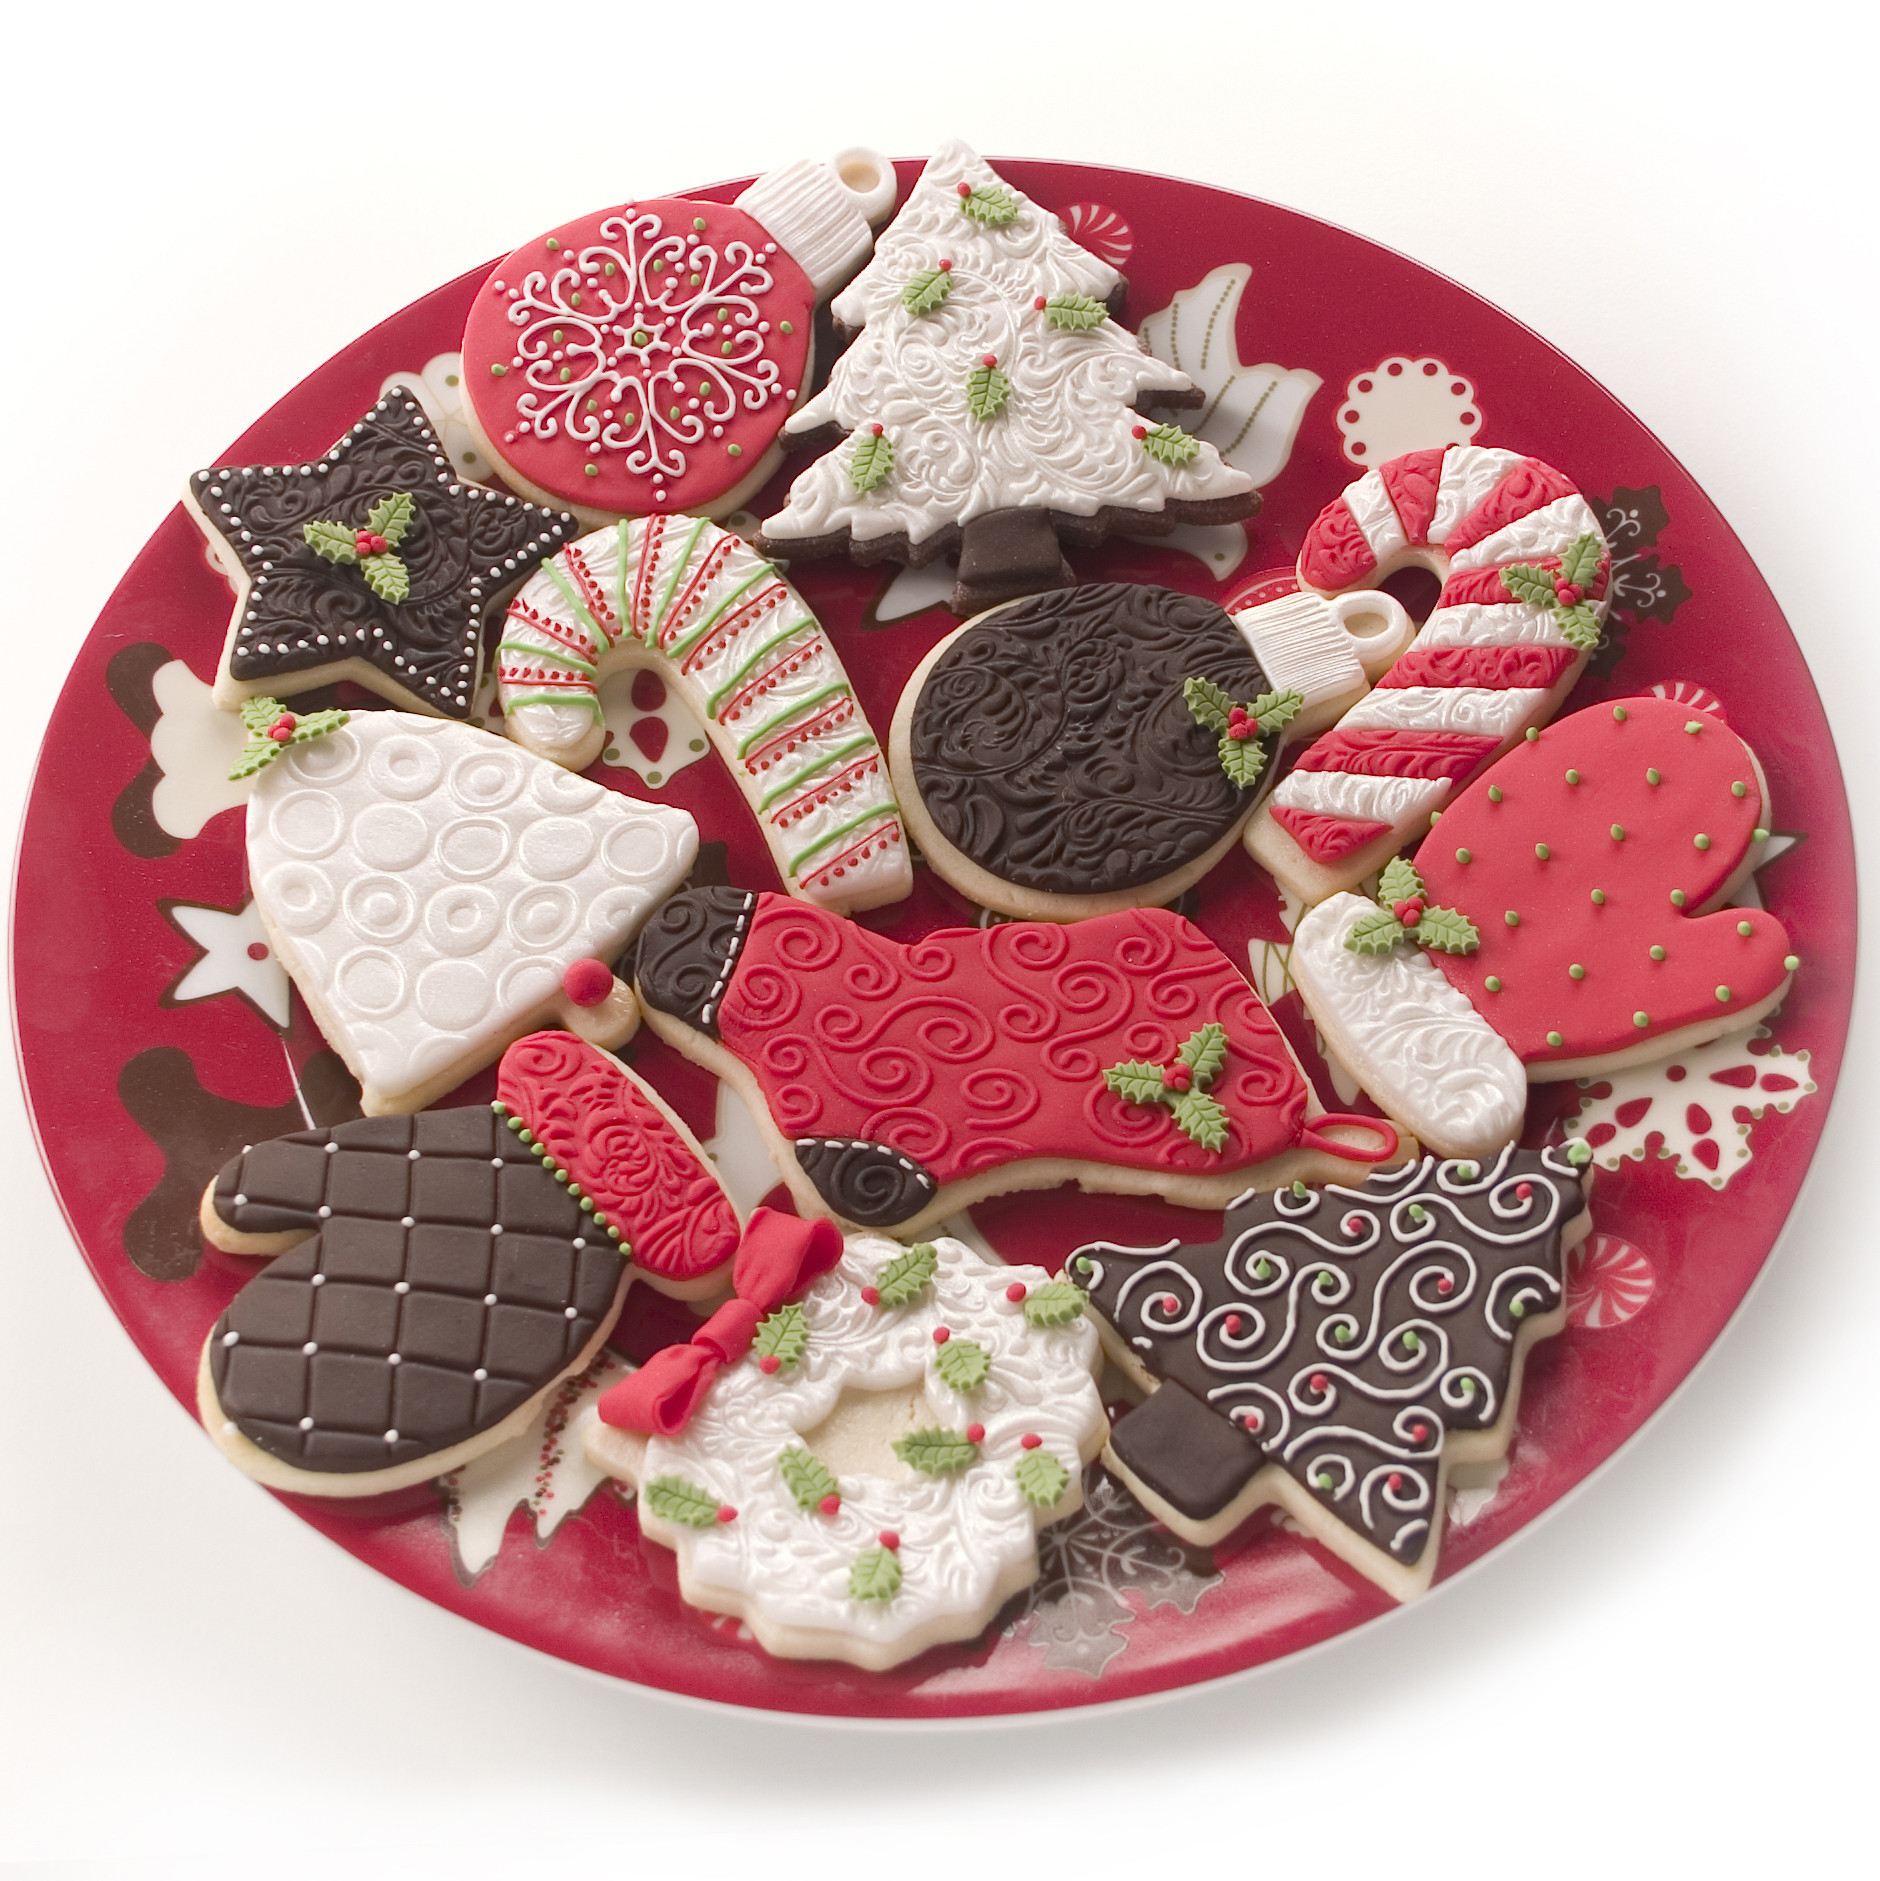 Pics Of Christmas Cookies
 Holiday cookies